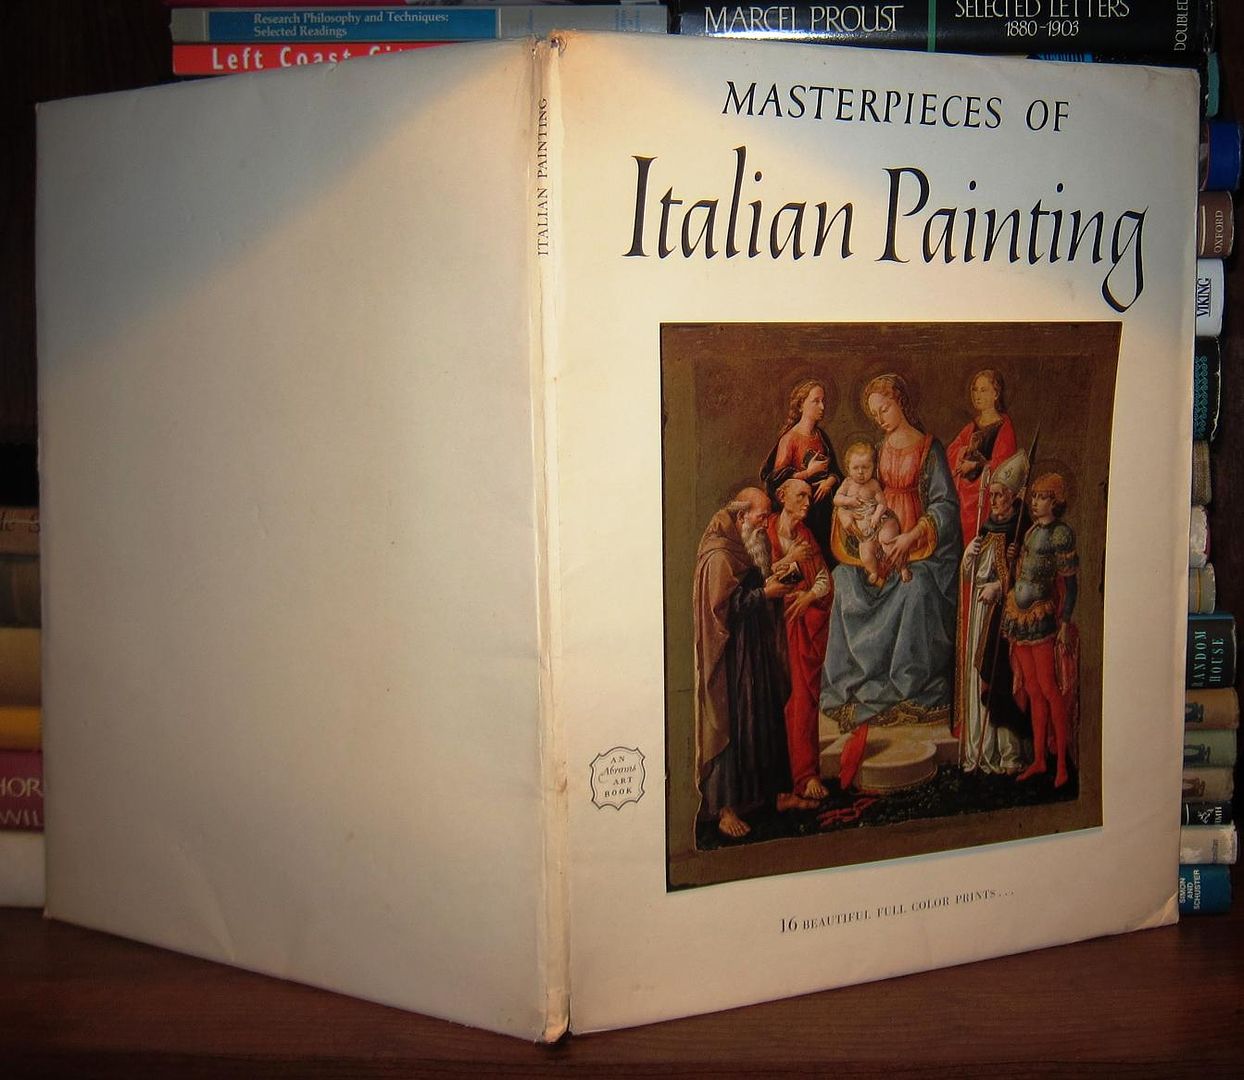 THOMPSON, JAMES W. - Masterpieces of Italian Painting